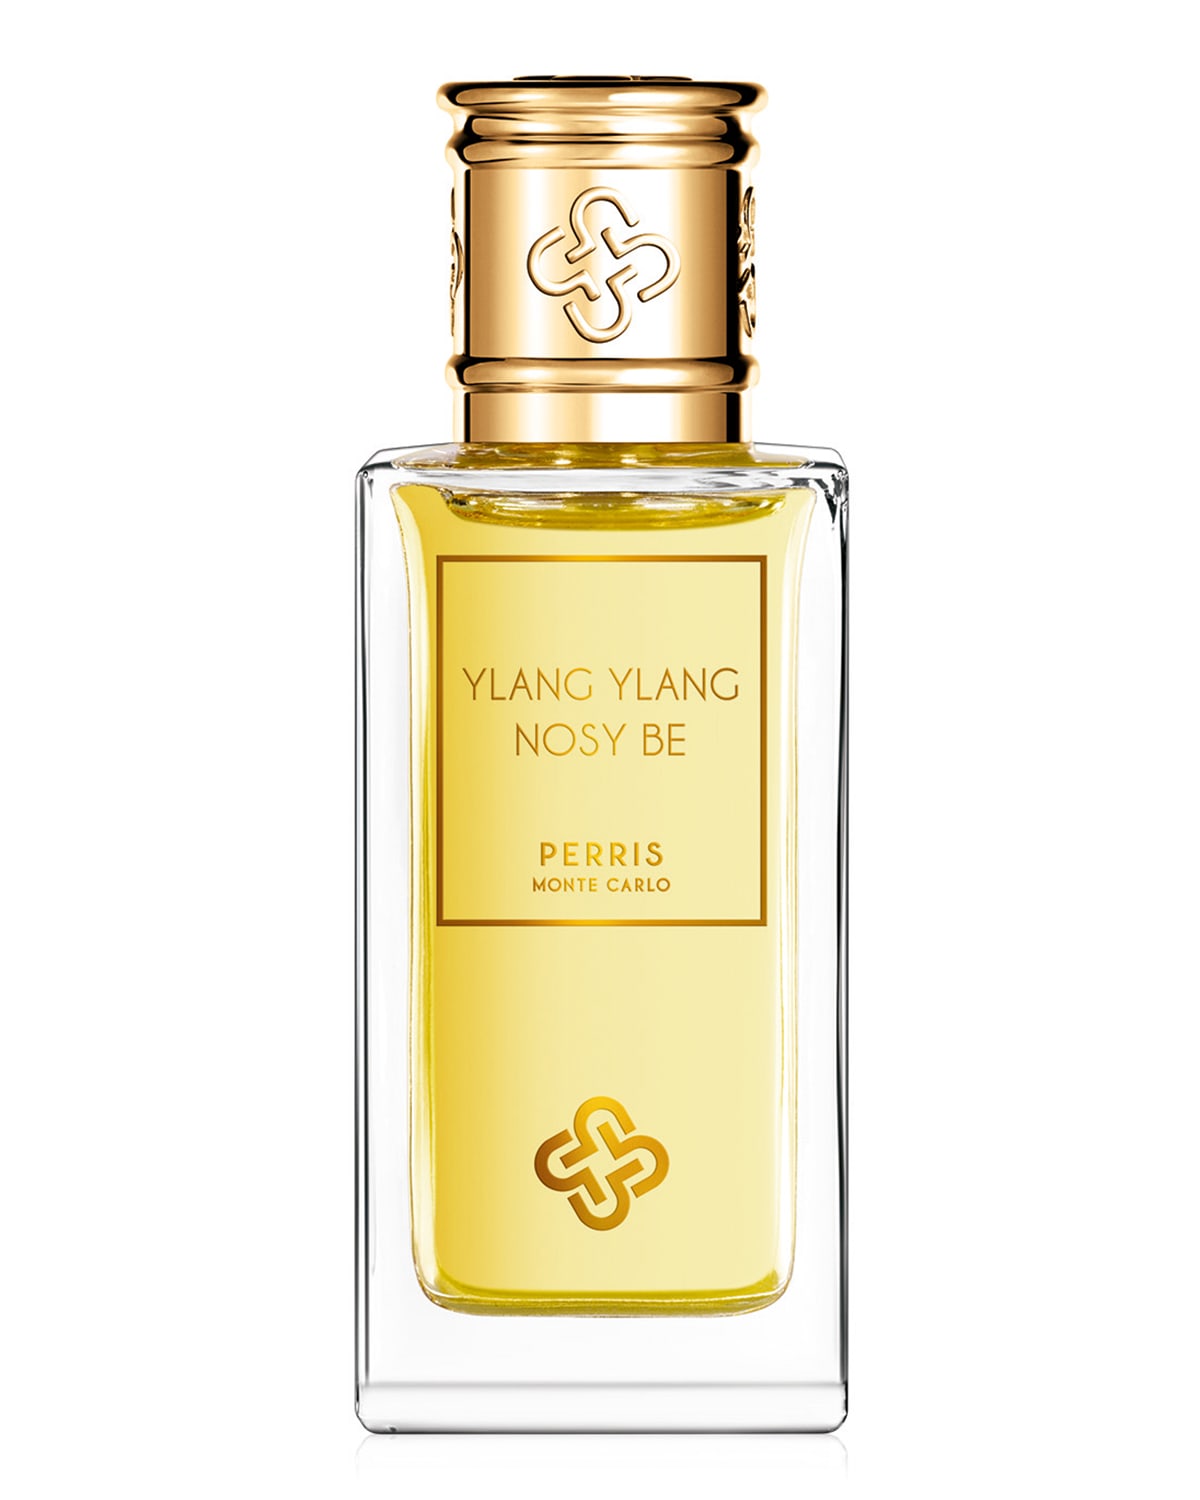 Perris Monte Carlo Ylang Ylang Nosy Be Perfume, 1.7 oz. / 50 mL